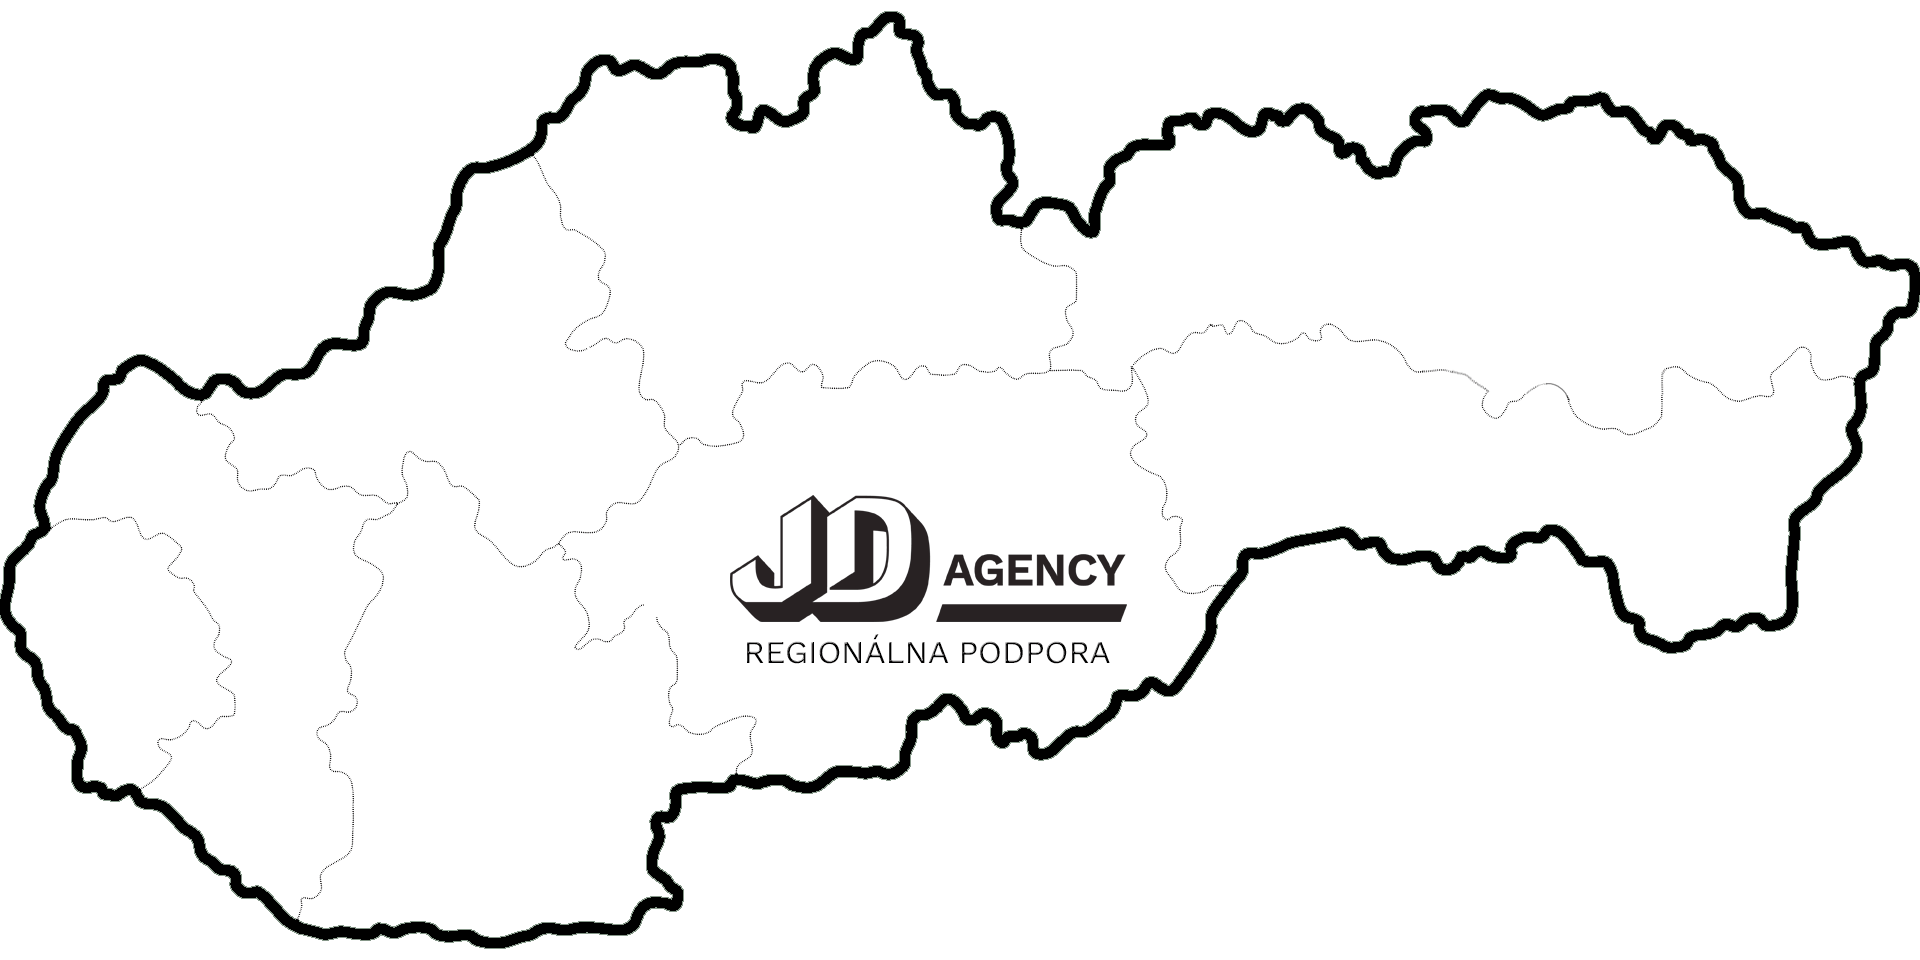 Regionálna podpora JD Agency